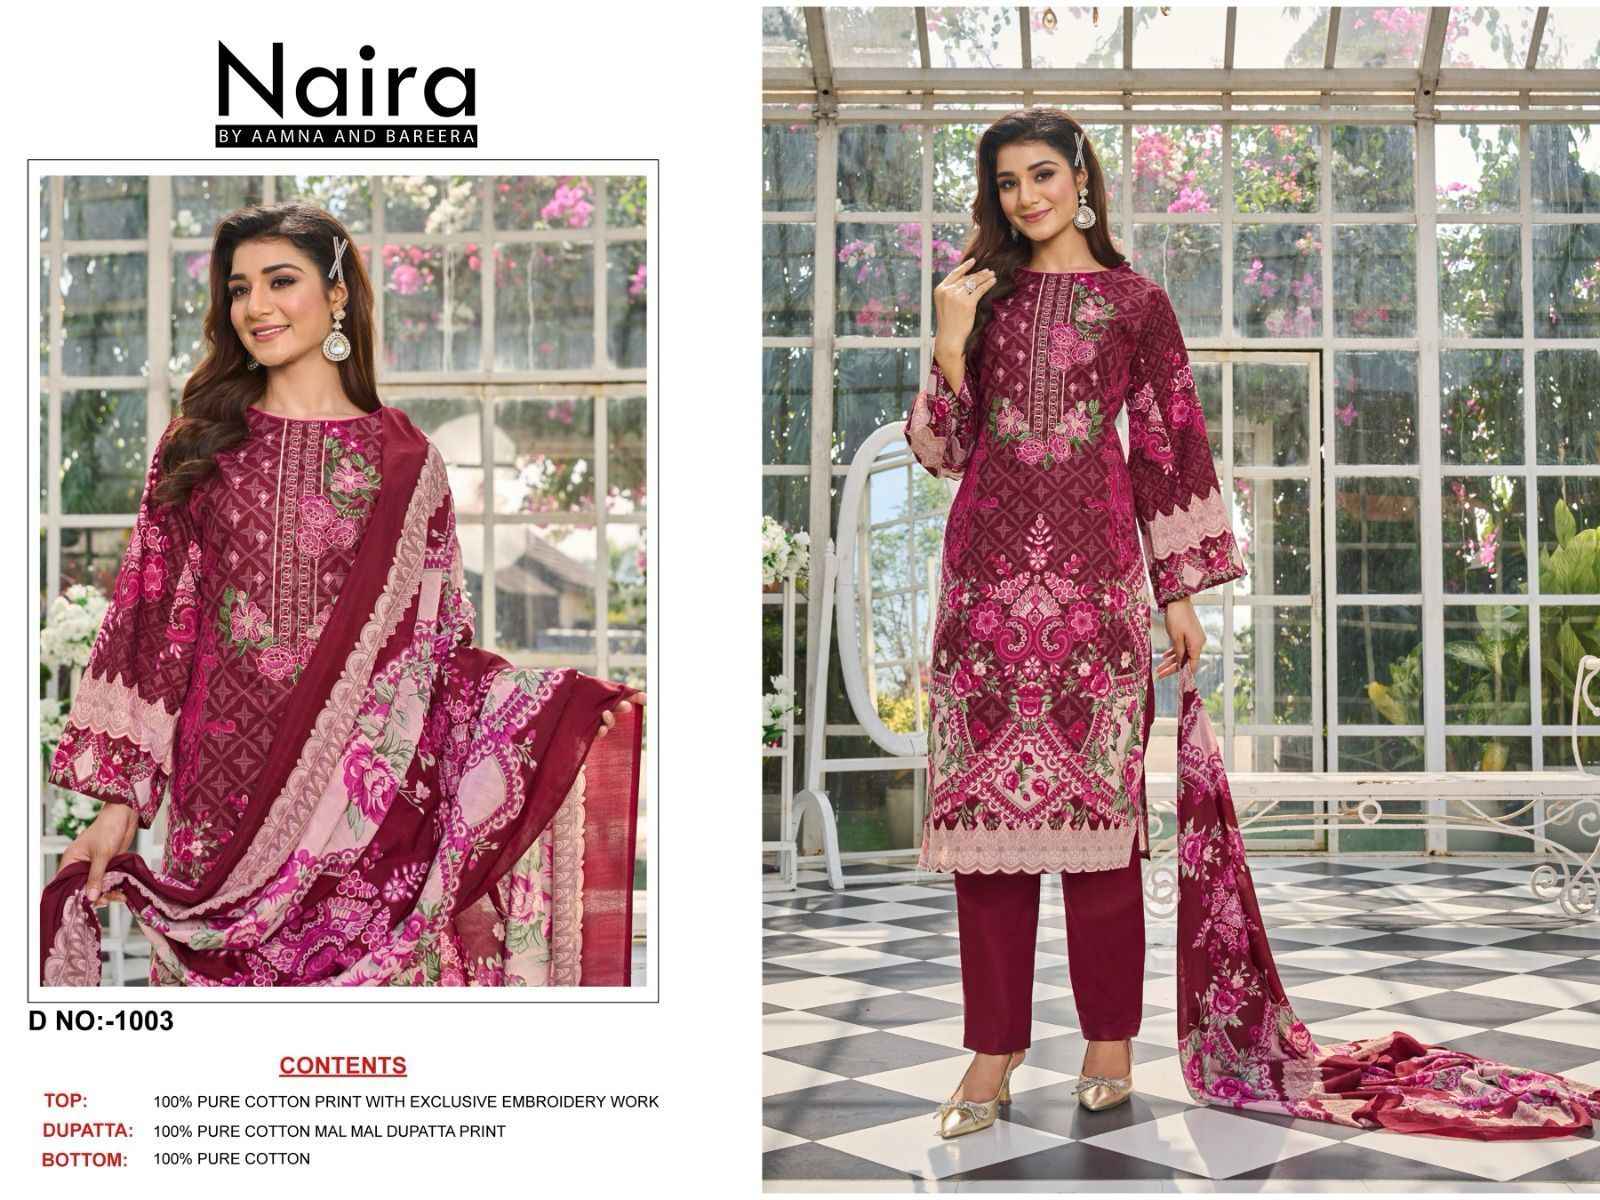 Aamna & Bareera Naira Cotton Dress Material 10 pcs Catalogue